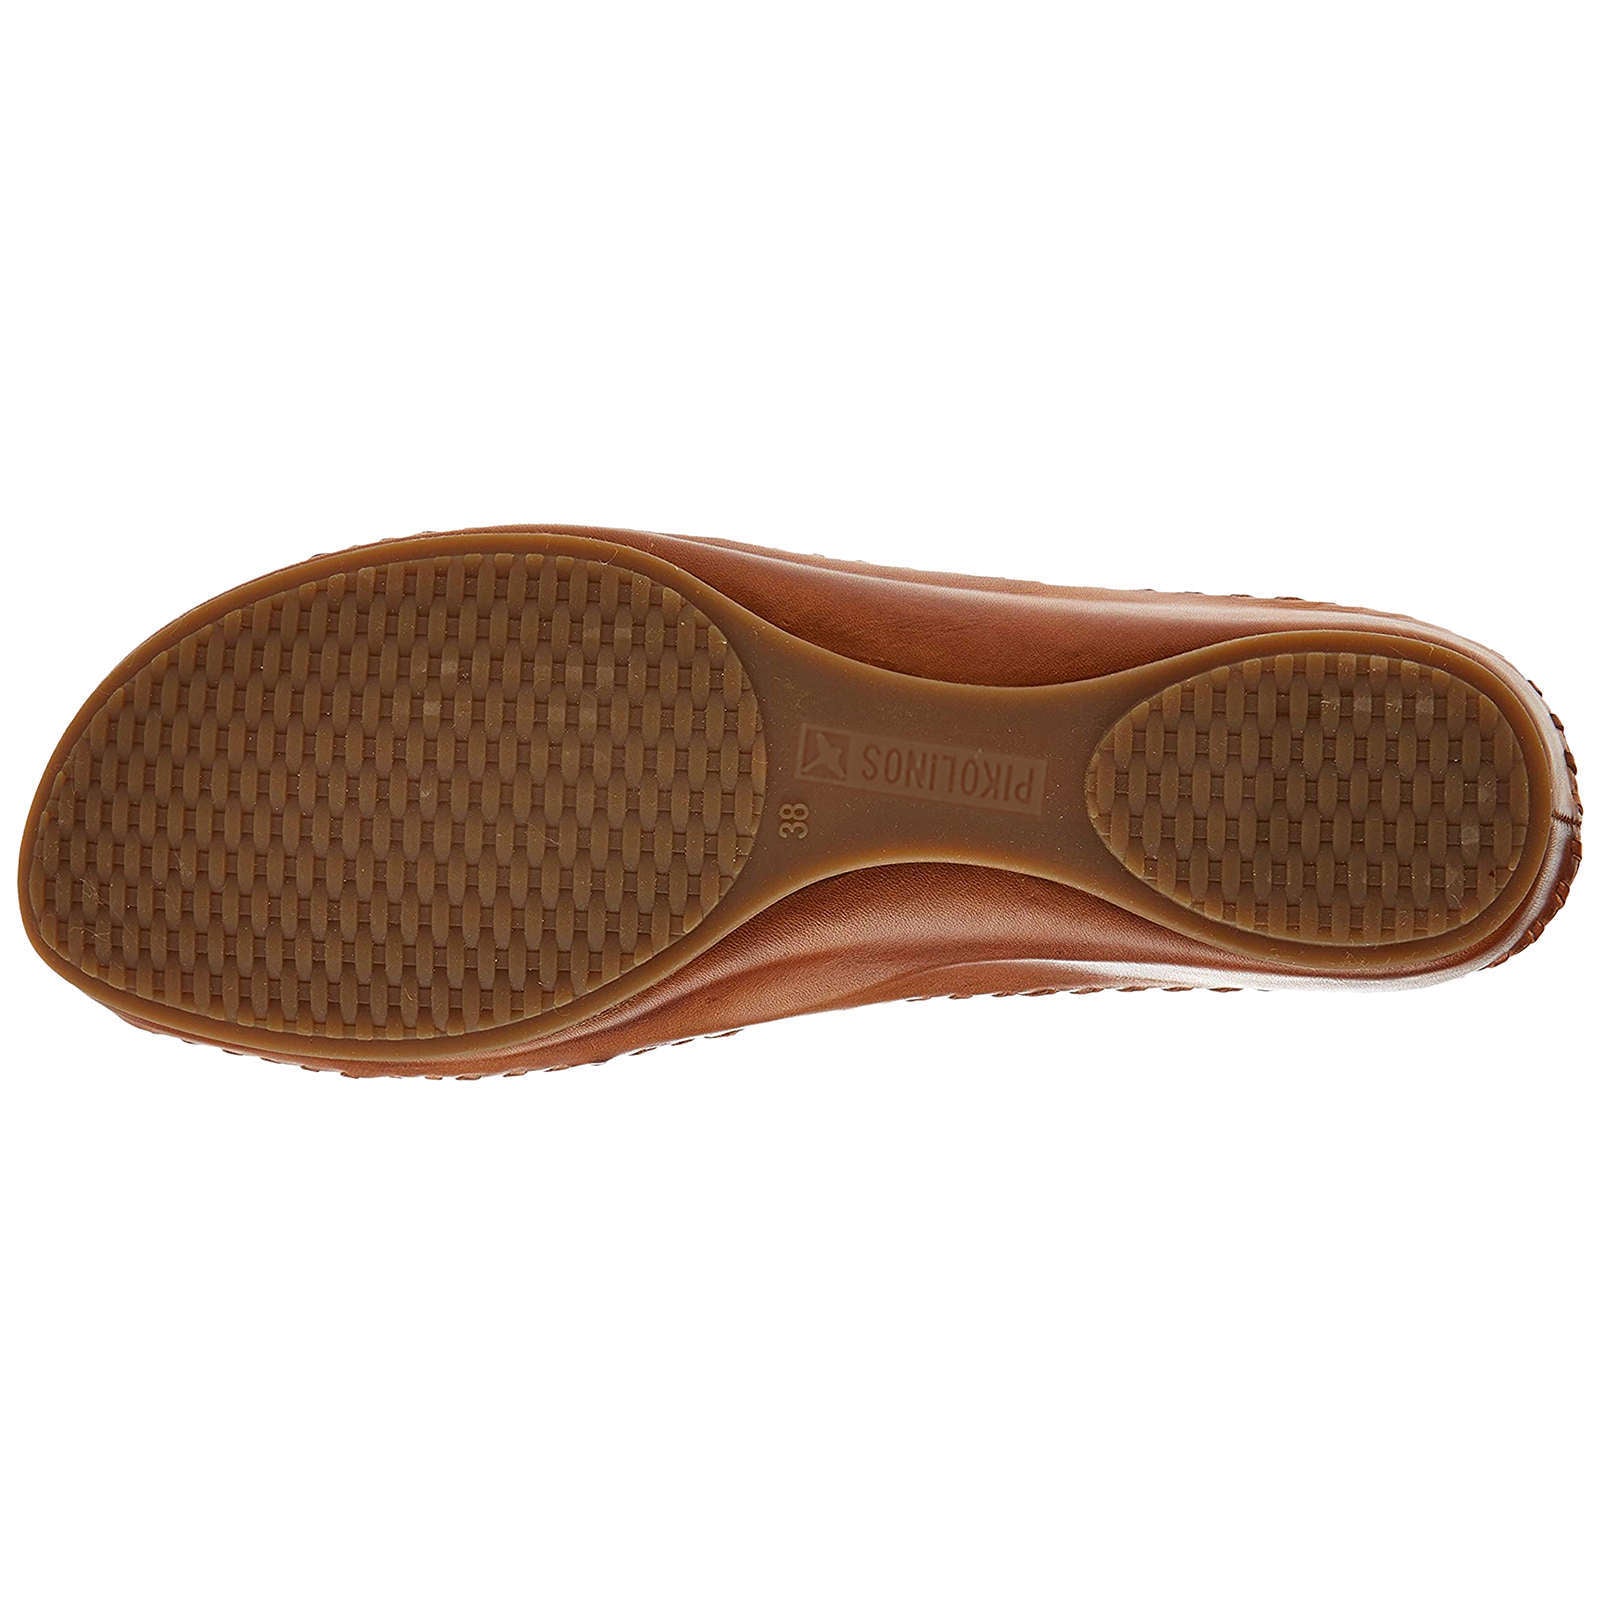 Pikolinos Puerto Vallarta 655-0575 Leather Womens Sandals#color_coral brandy